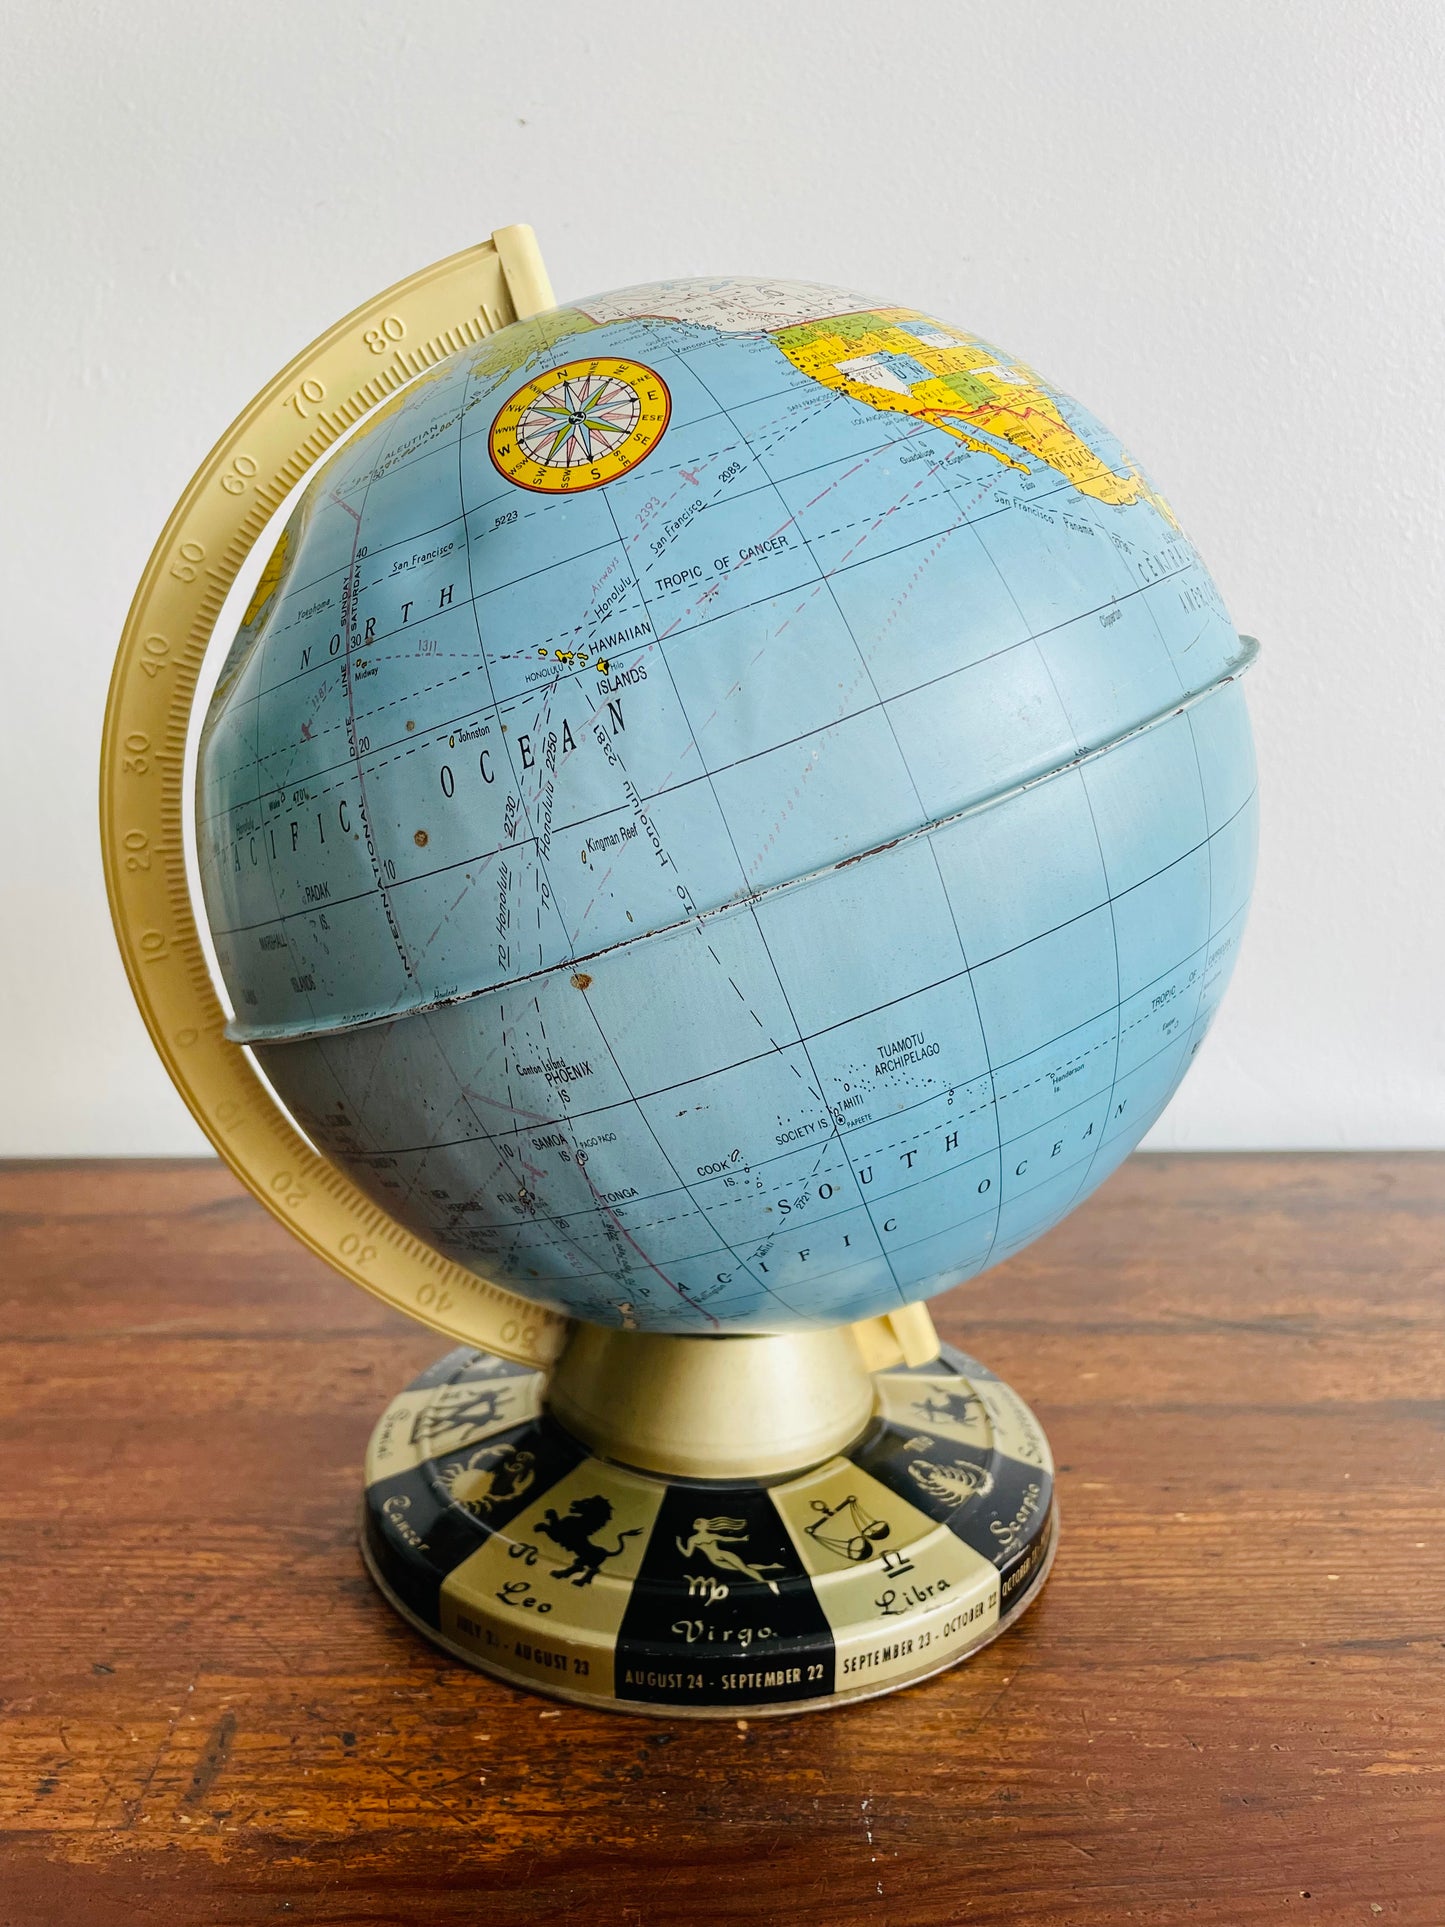 Ohio Art Tin World Globe with Zodiac Astrology Symbols - Made in Bryan Ohio USA